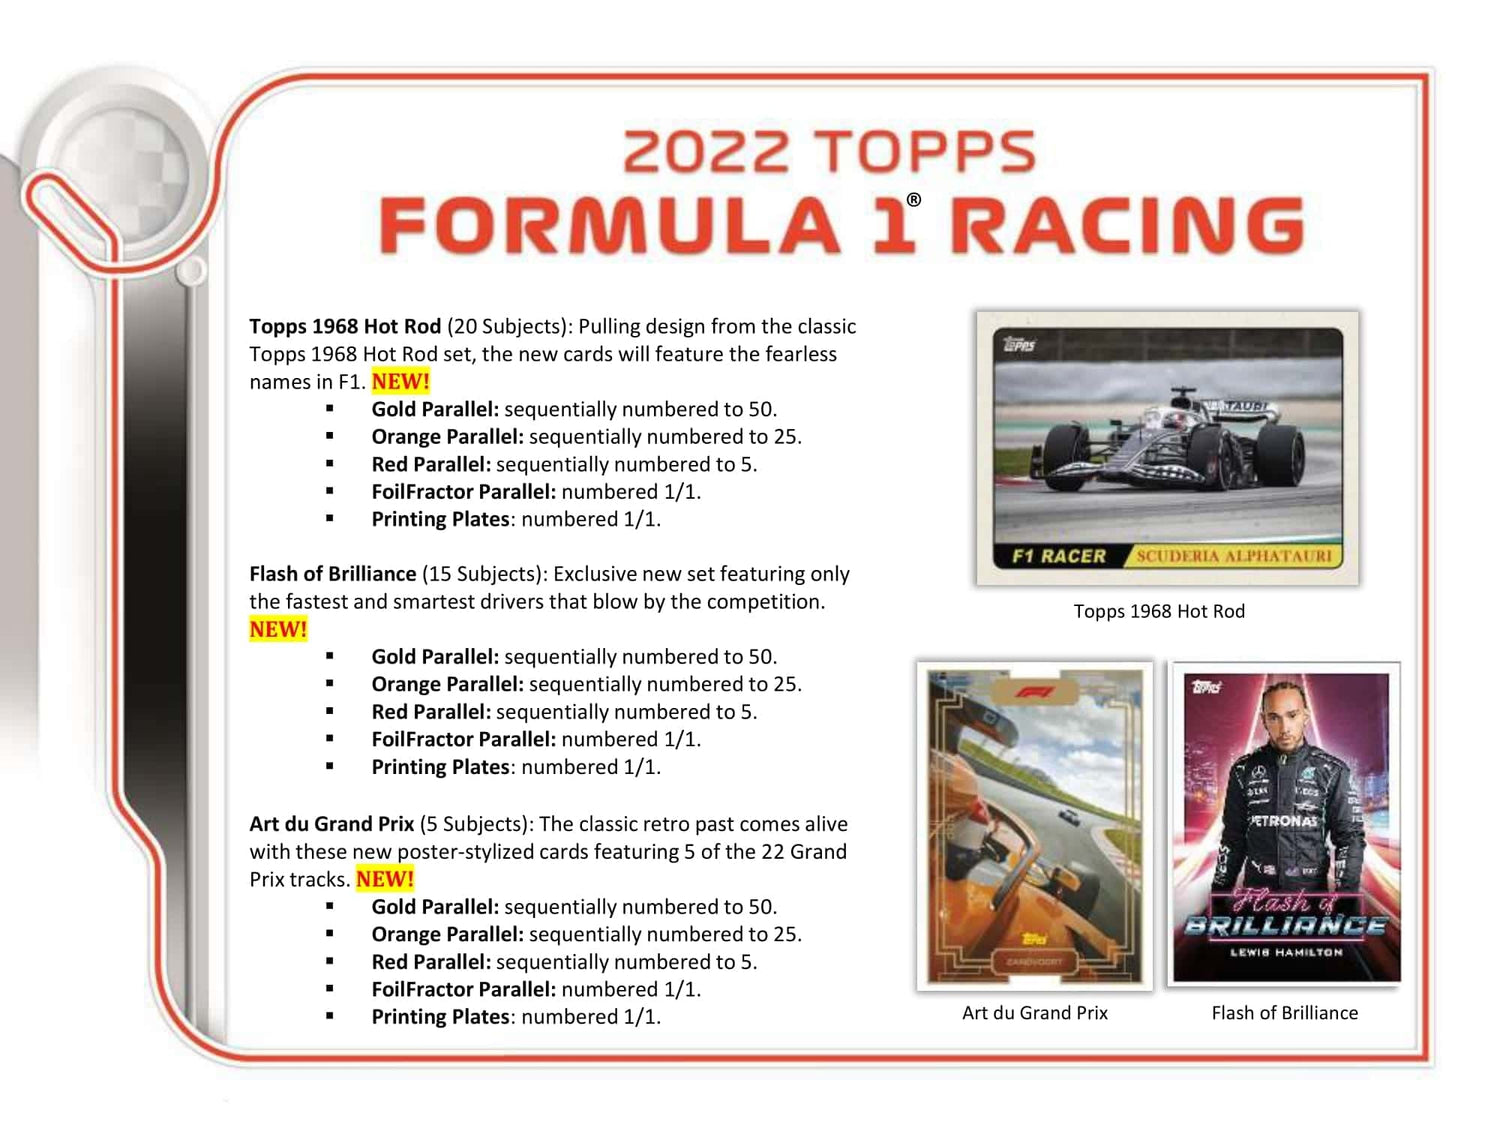 Topps F1 Formula 1 Racing Hobby Box 2022 Flasg of Brilliance